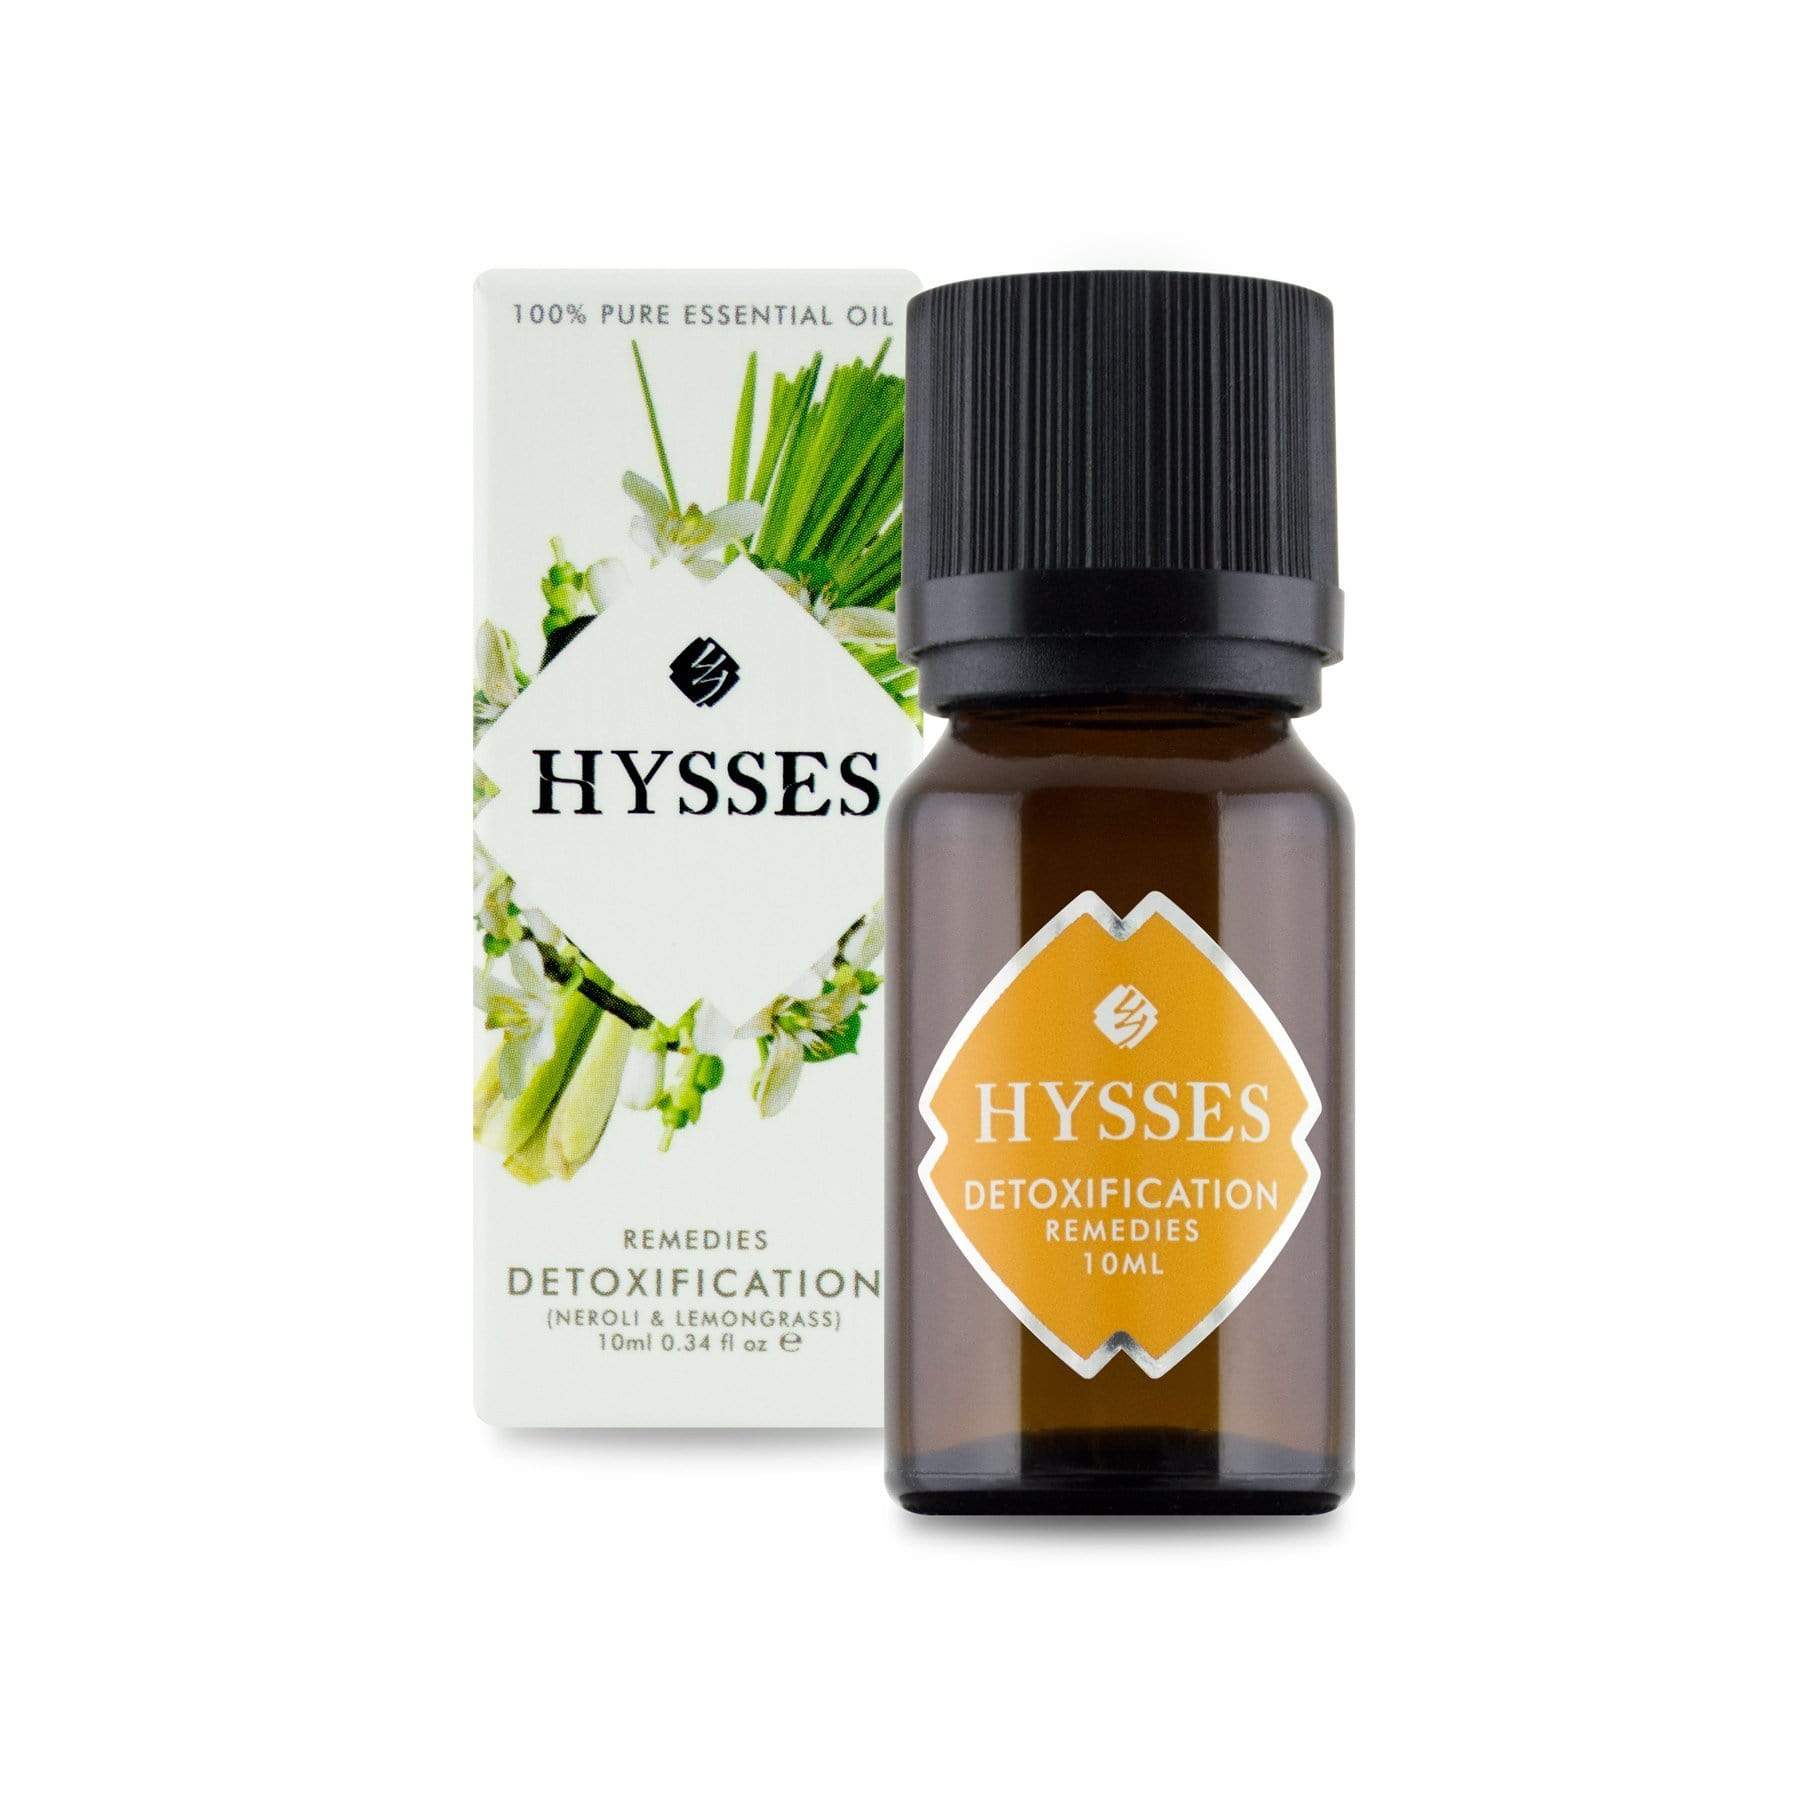 Hysses Essential Oil Remedies, Detoxification, 10ml